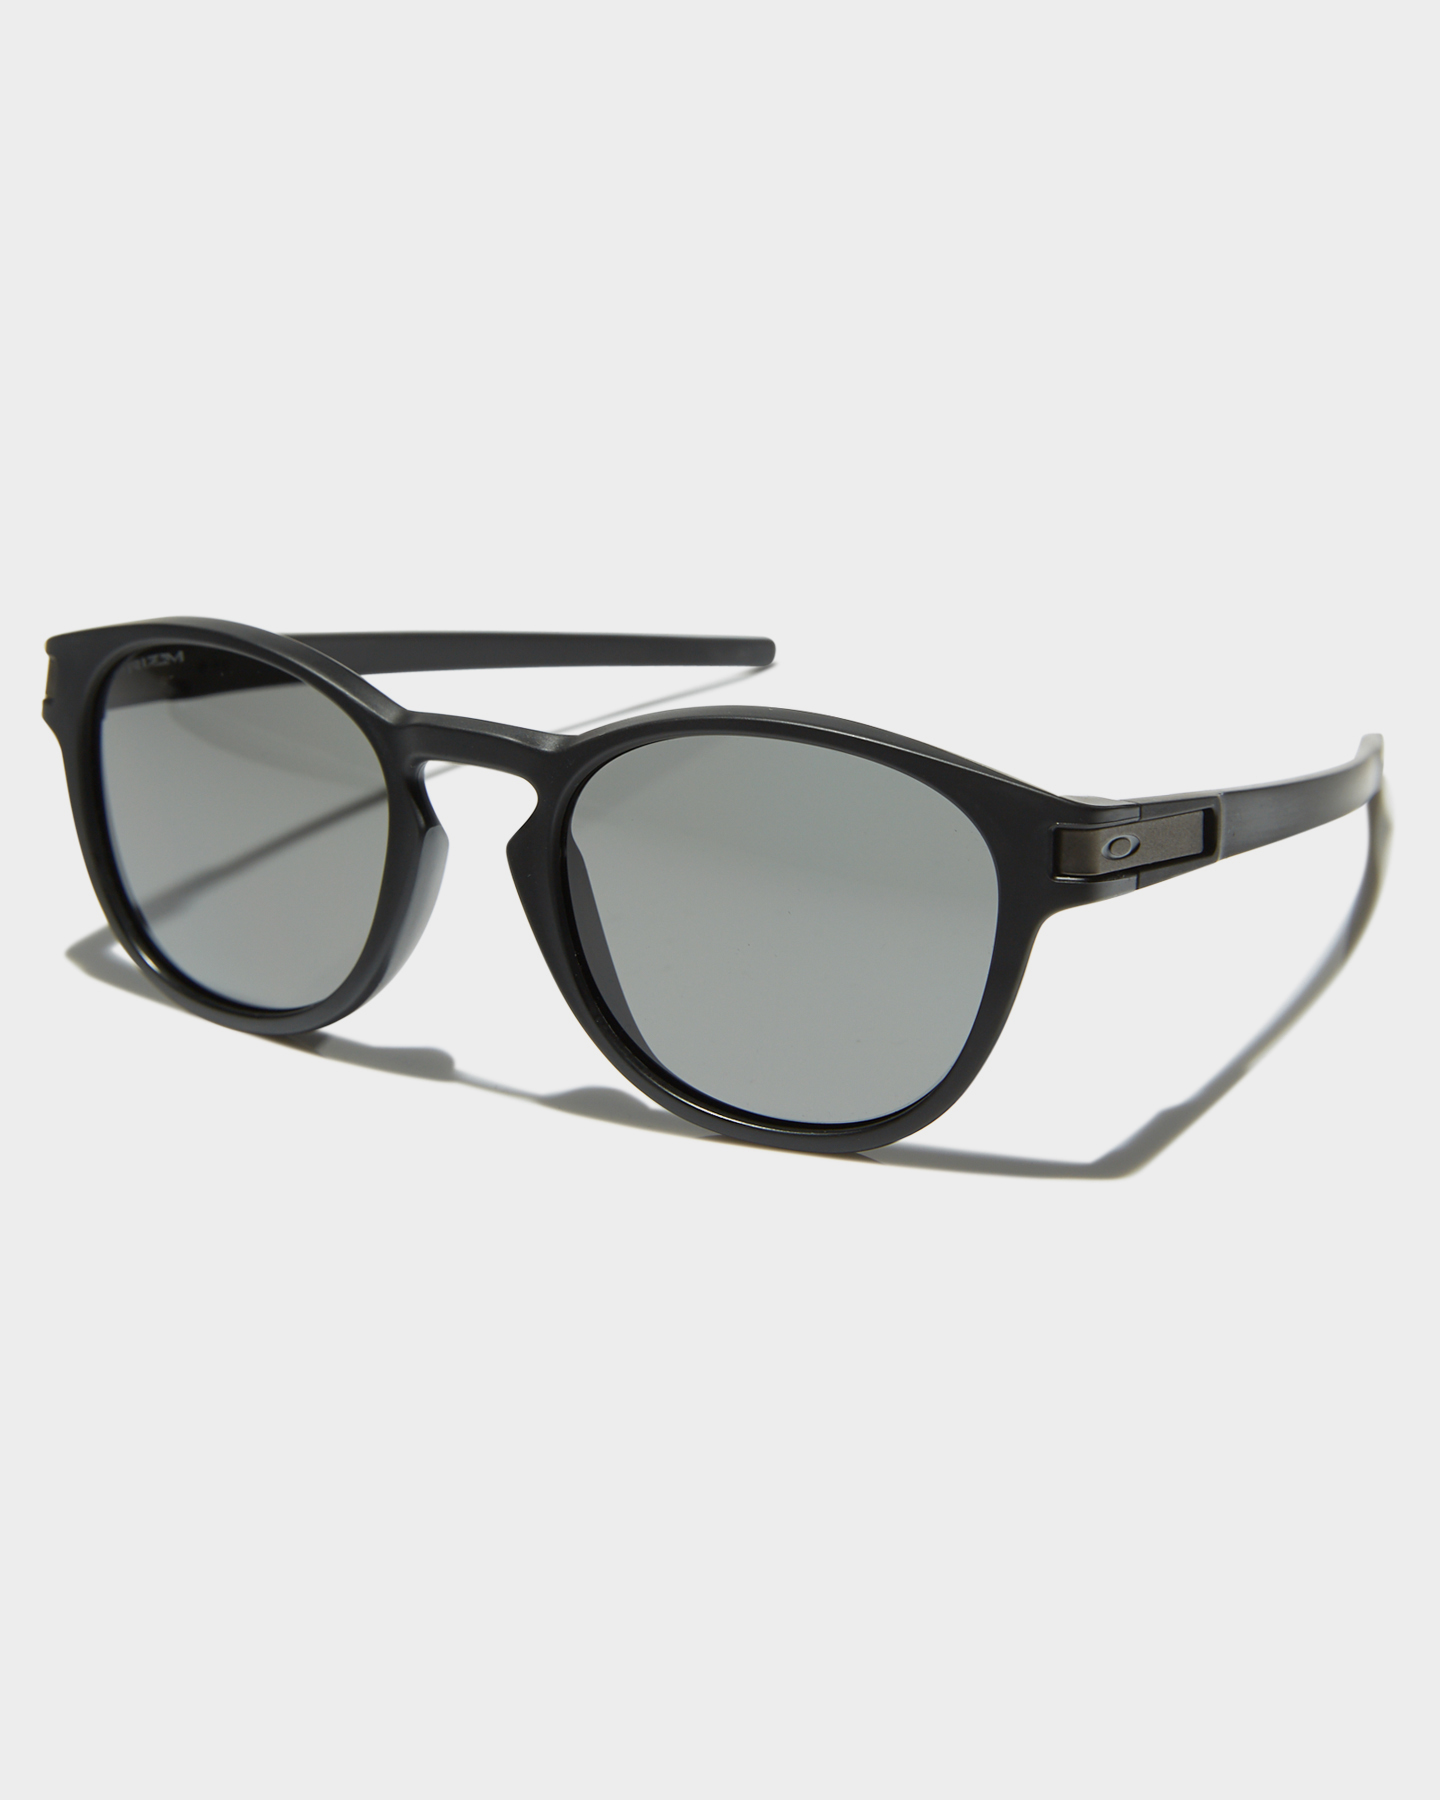 oakley grey sunglasses